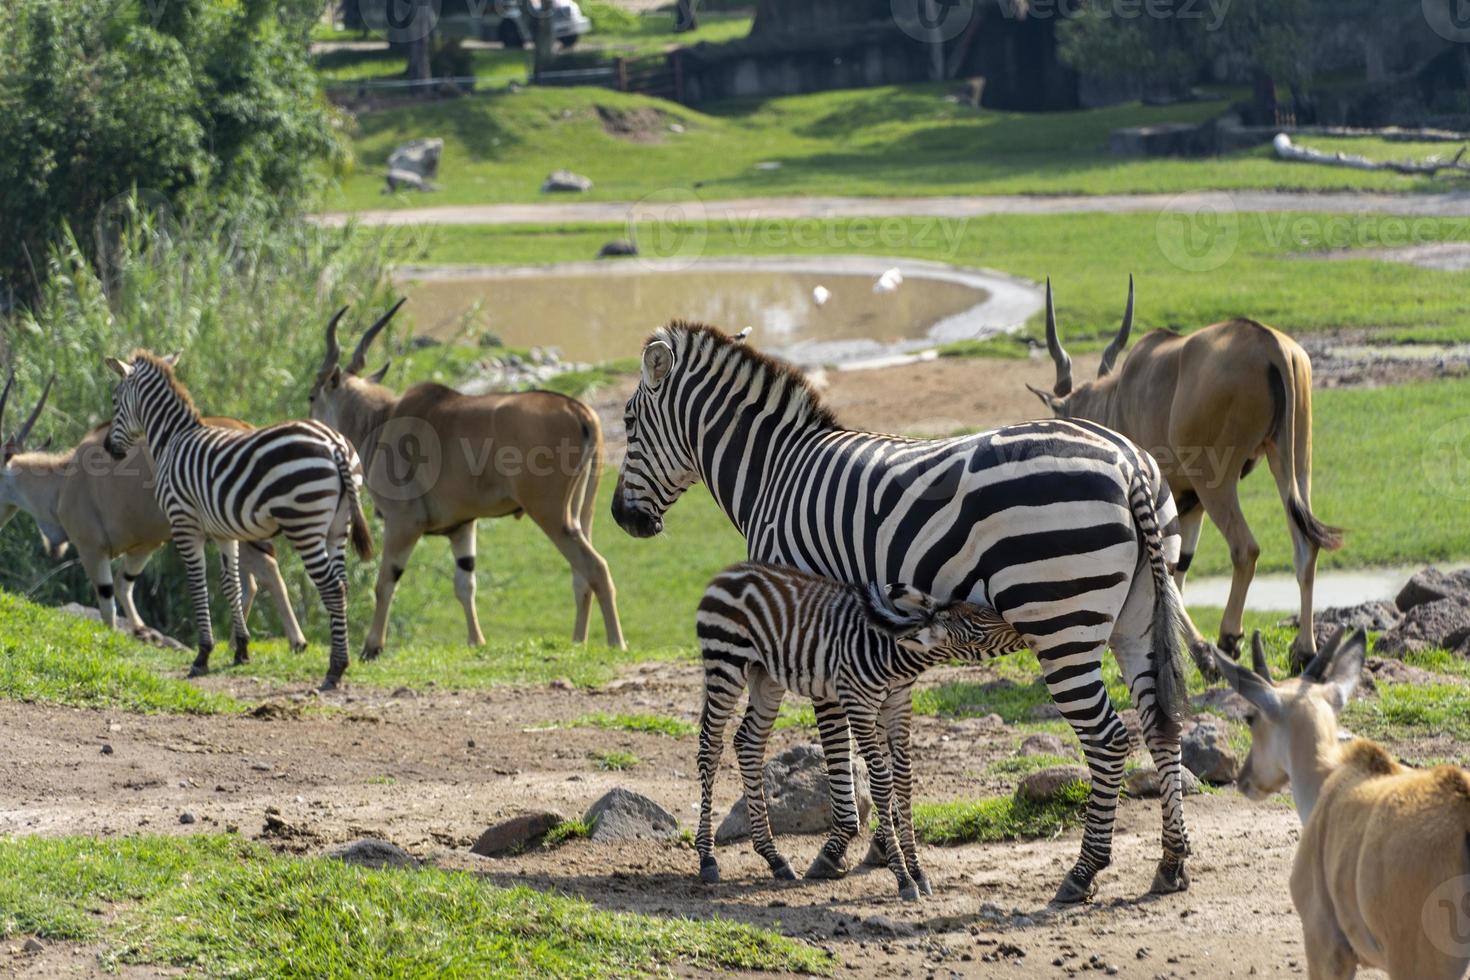 equus quagga zebra y baby zebra, alrededor del antílope, baby zebra está alimentando, animales africanos. México, foto